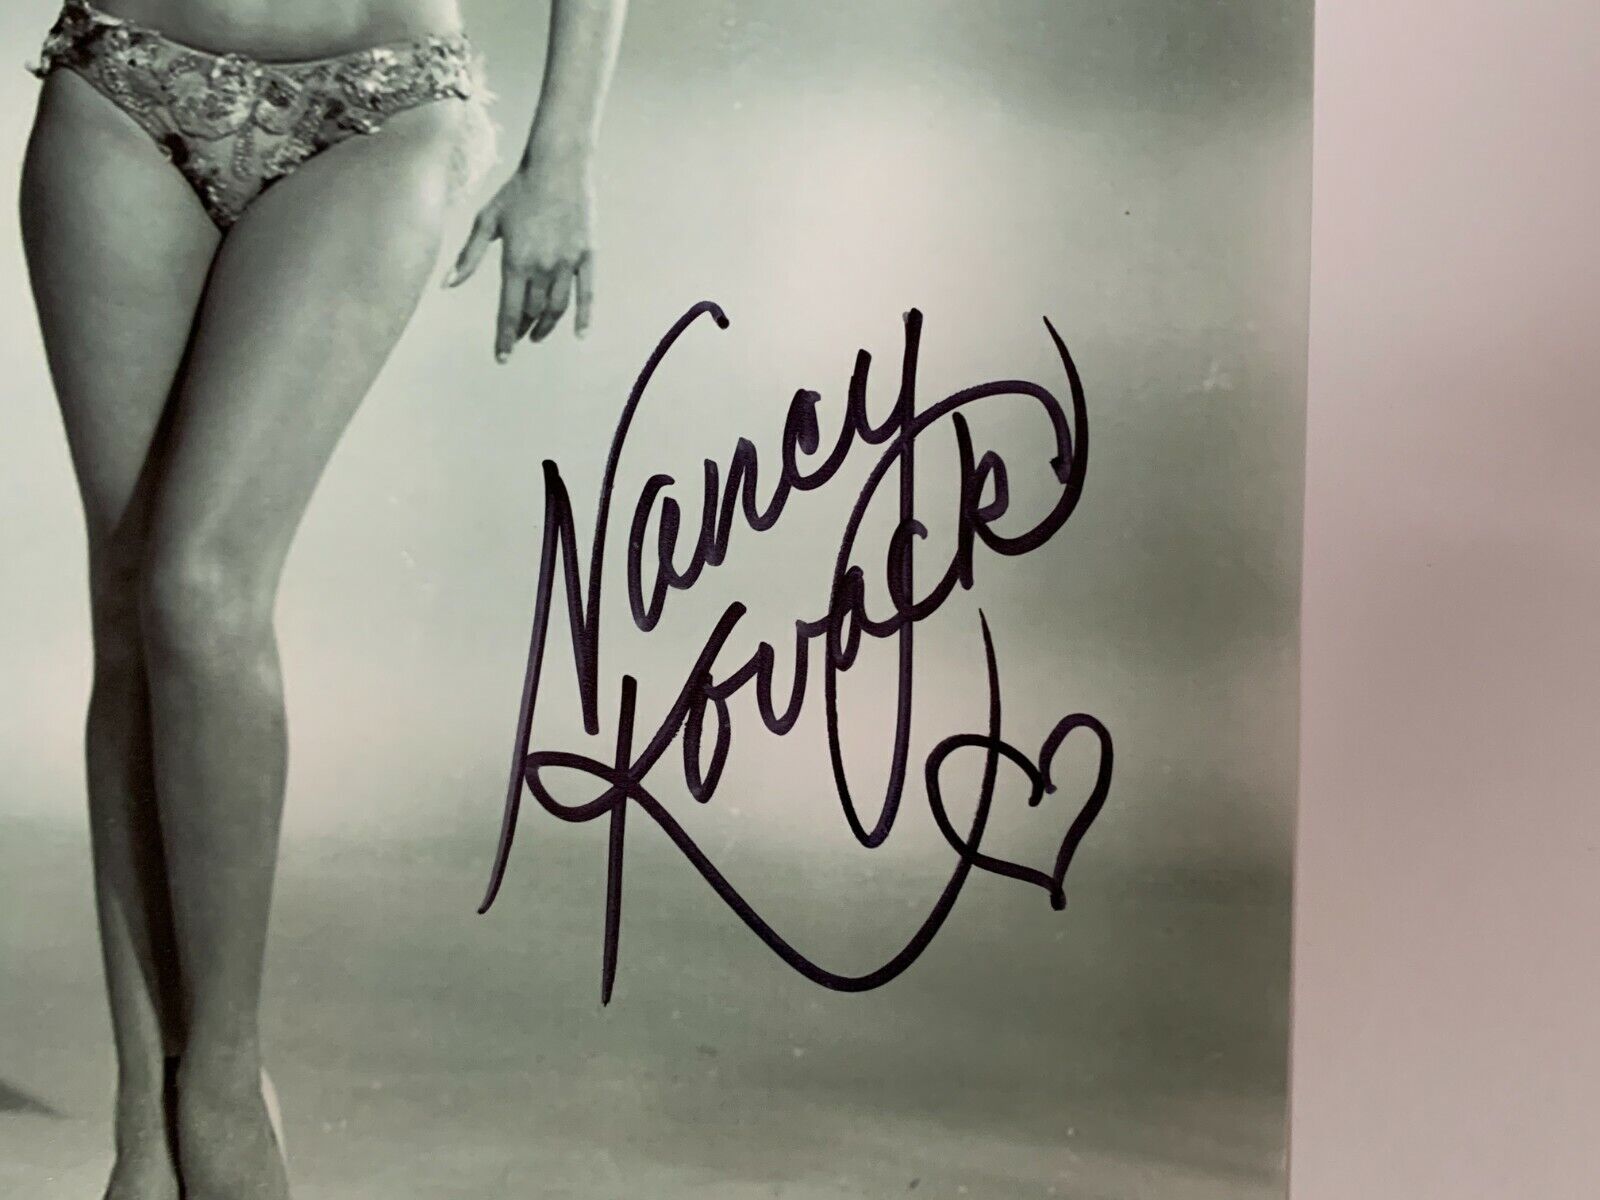 Nancy Kovak Swimsuit Autographed Signed 8x10 B&W Photo JSA COA JJ83729